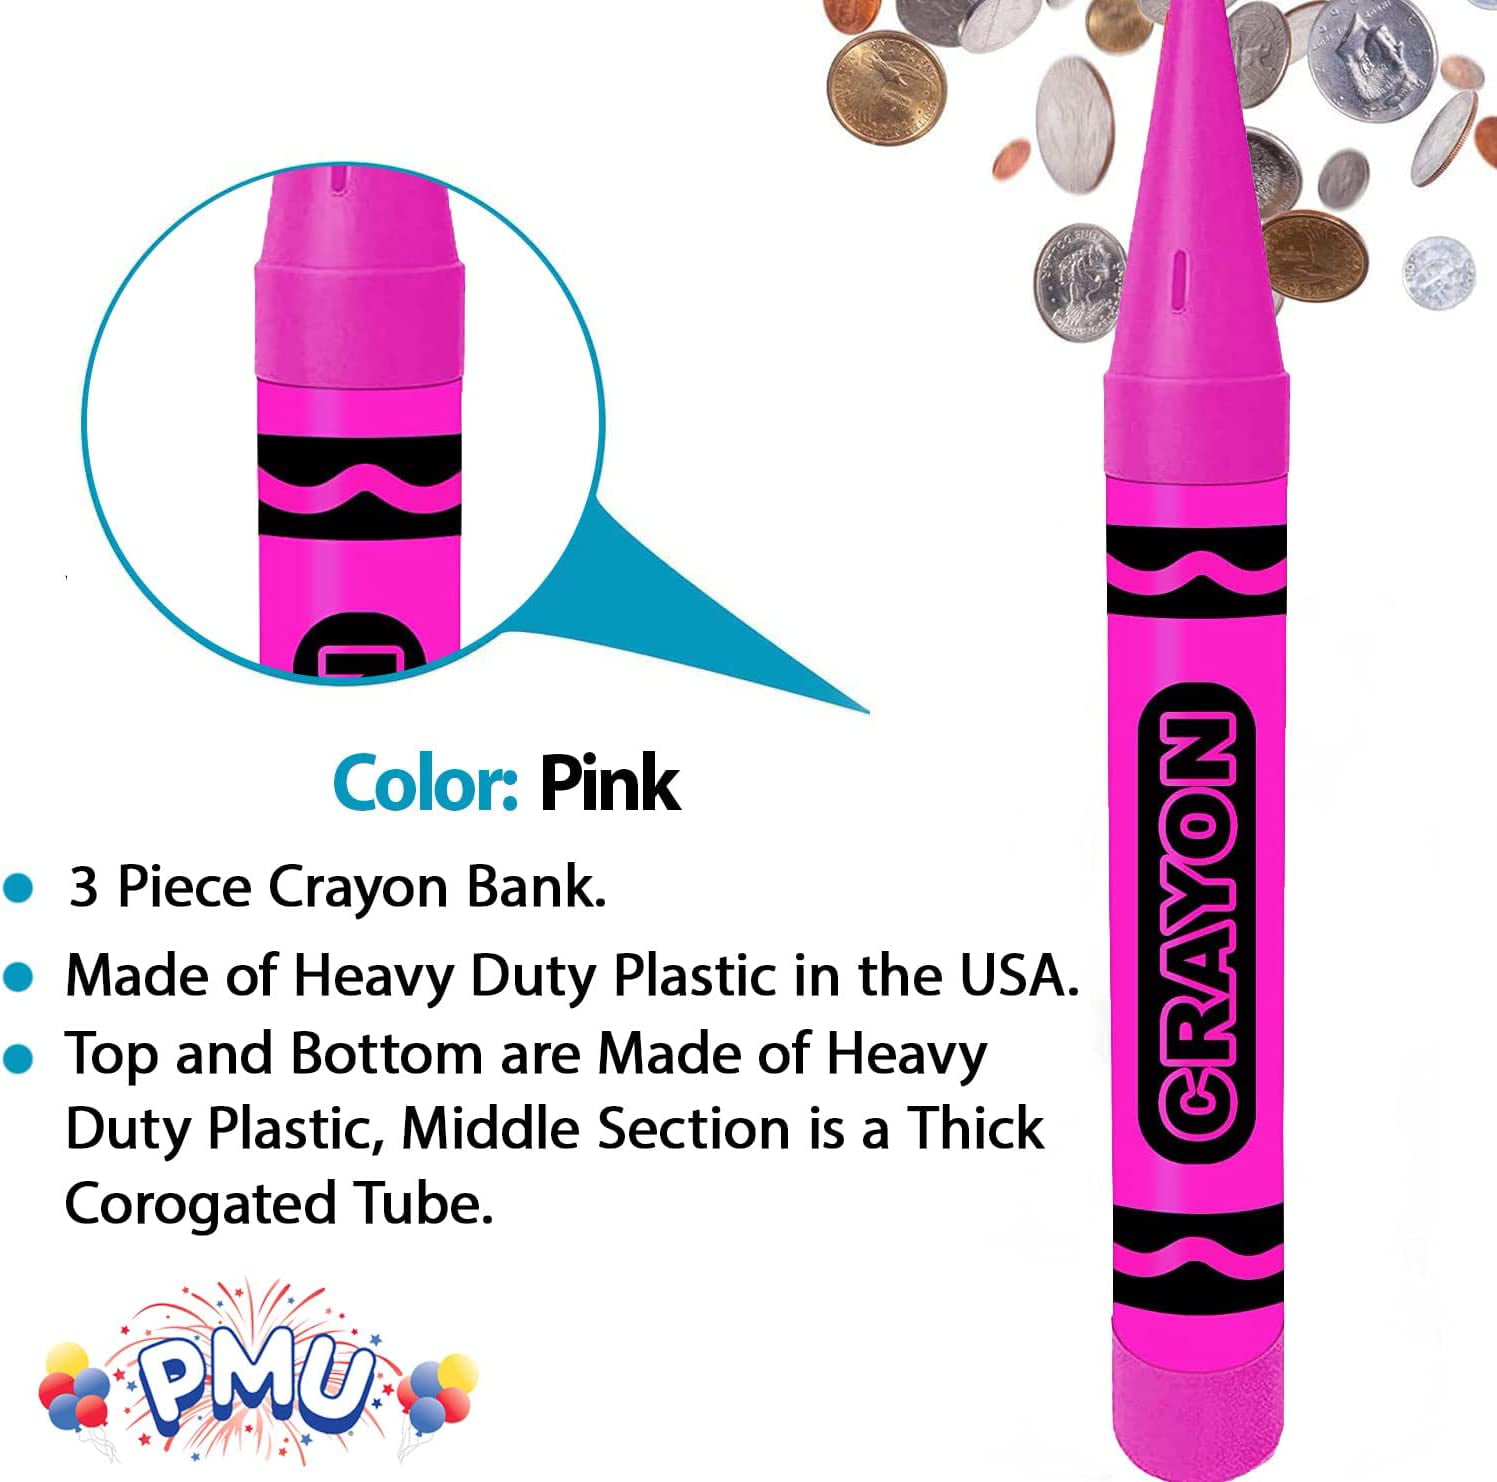  Fantazia 200BDP 36 inch Giant Crayon Bank - Pink by Fantazia  Company : Toys & Games